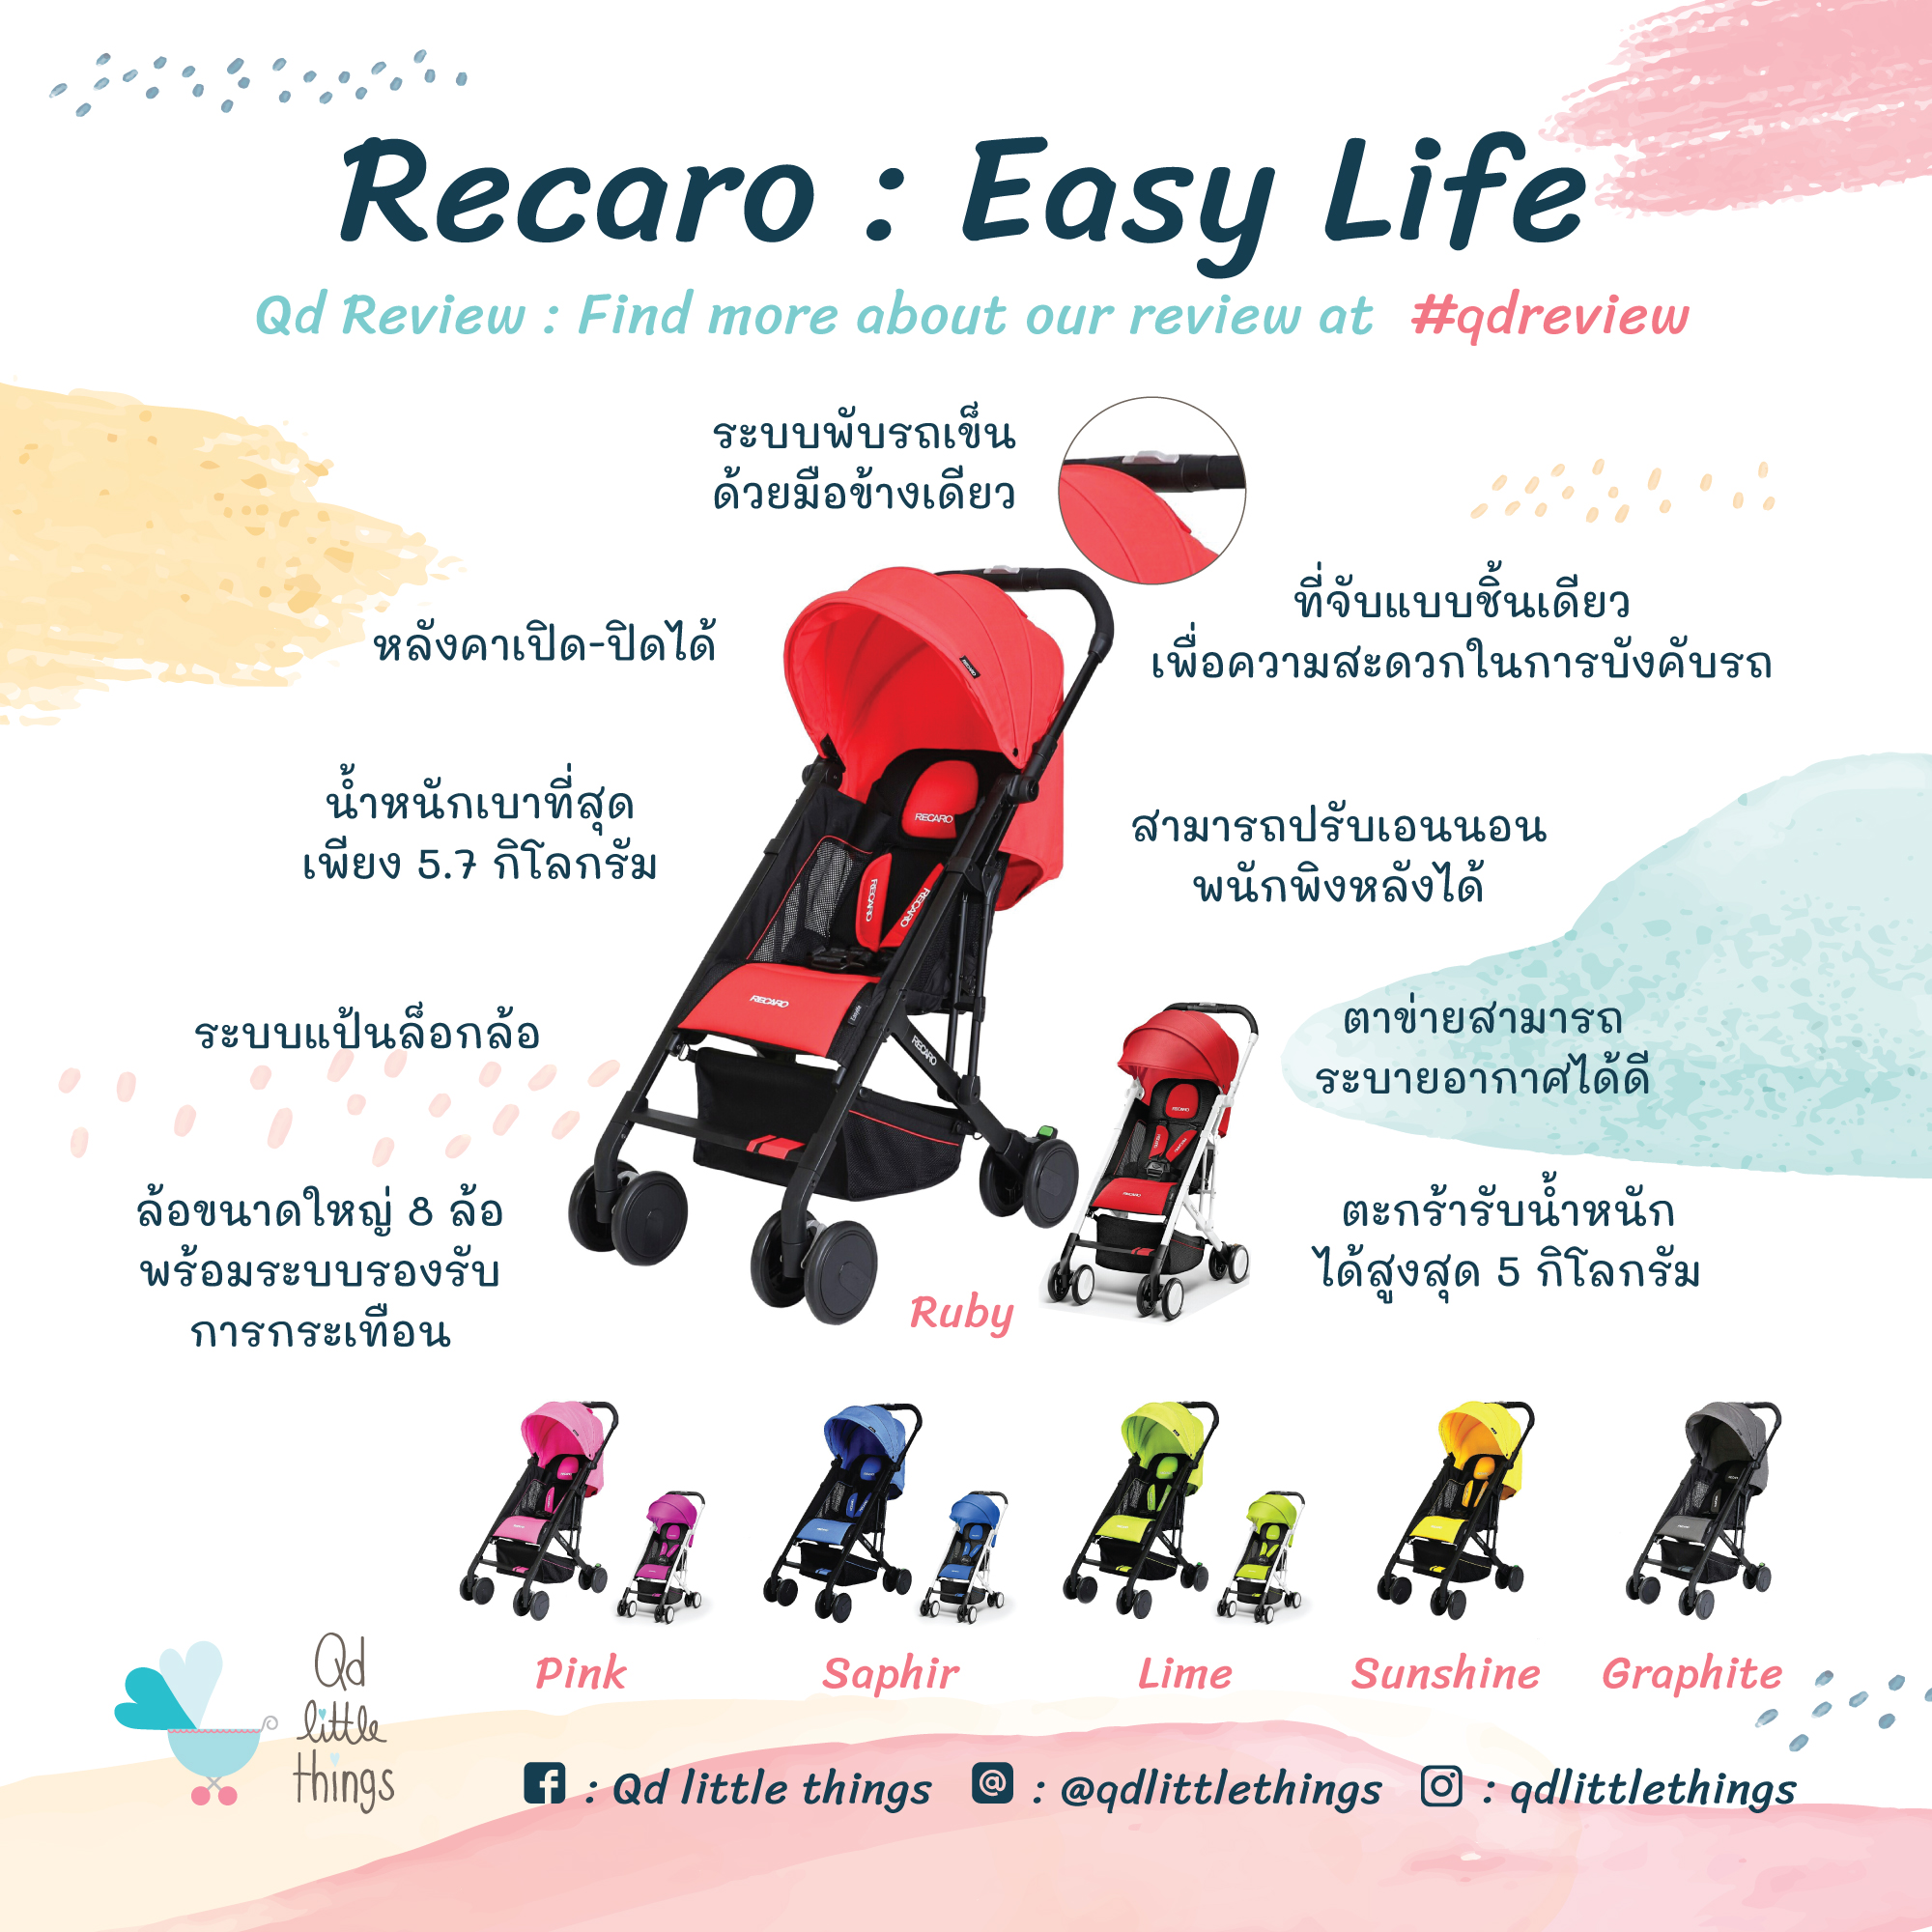 Recaro - Easy Life